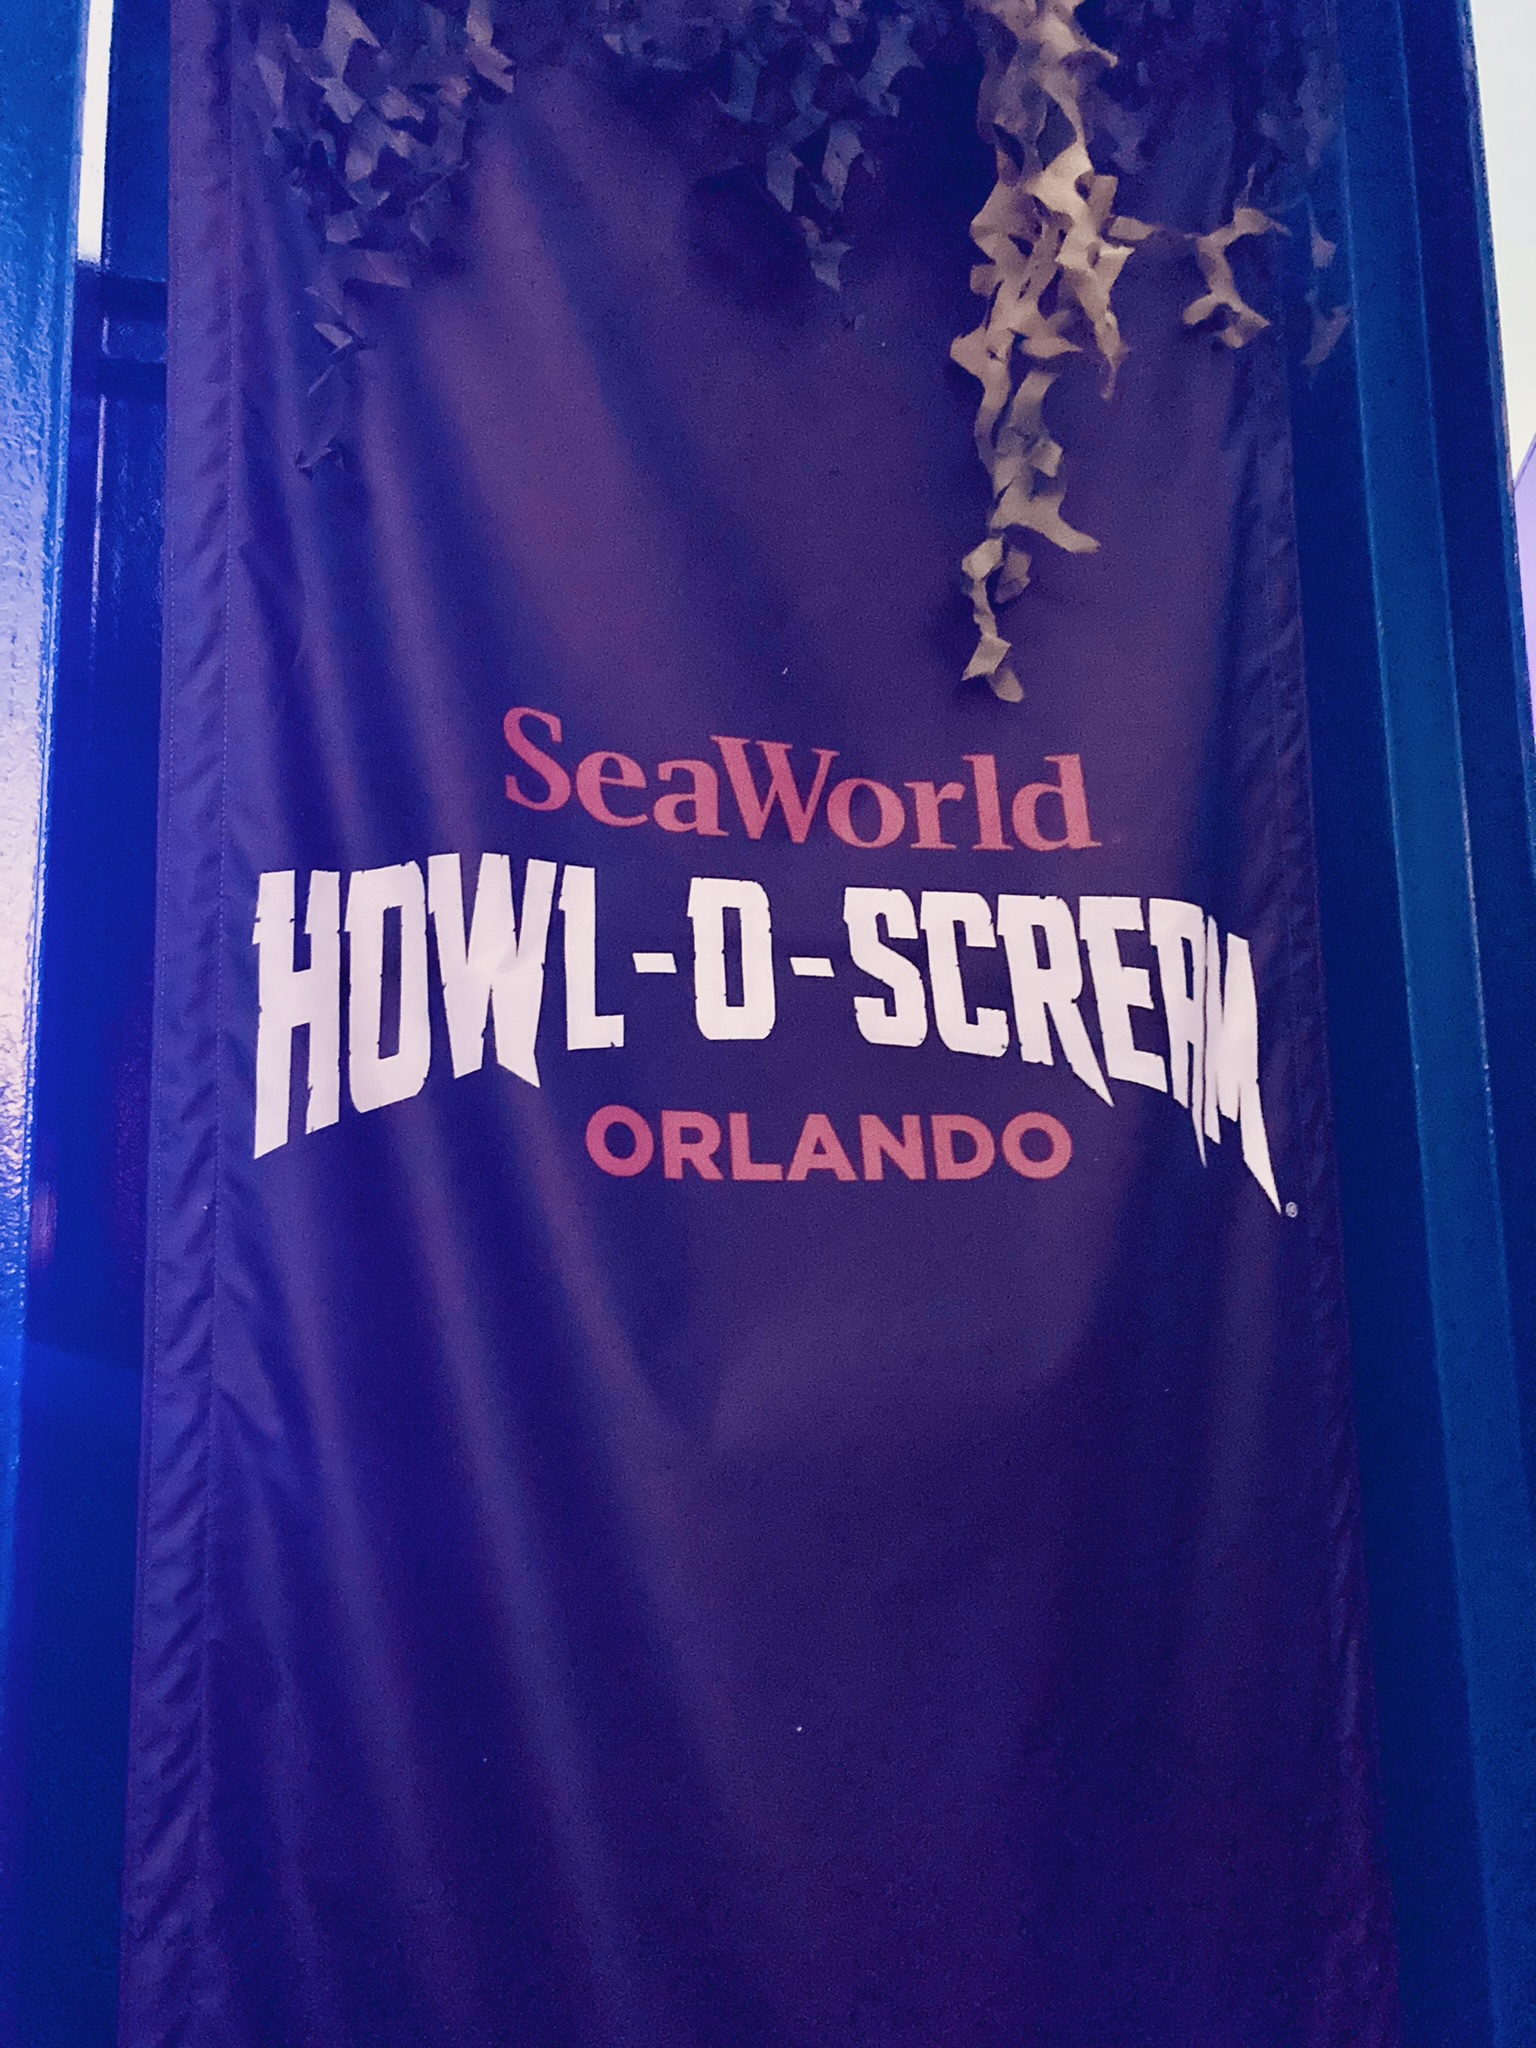 SeaWorld Orlando’s Howl-O-Scream: A Frightfully Good Night